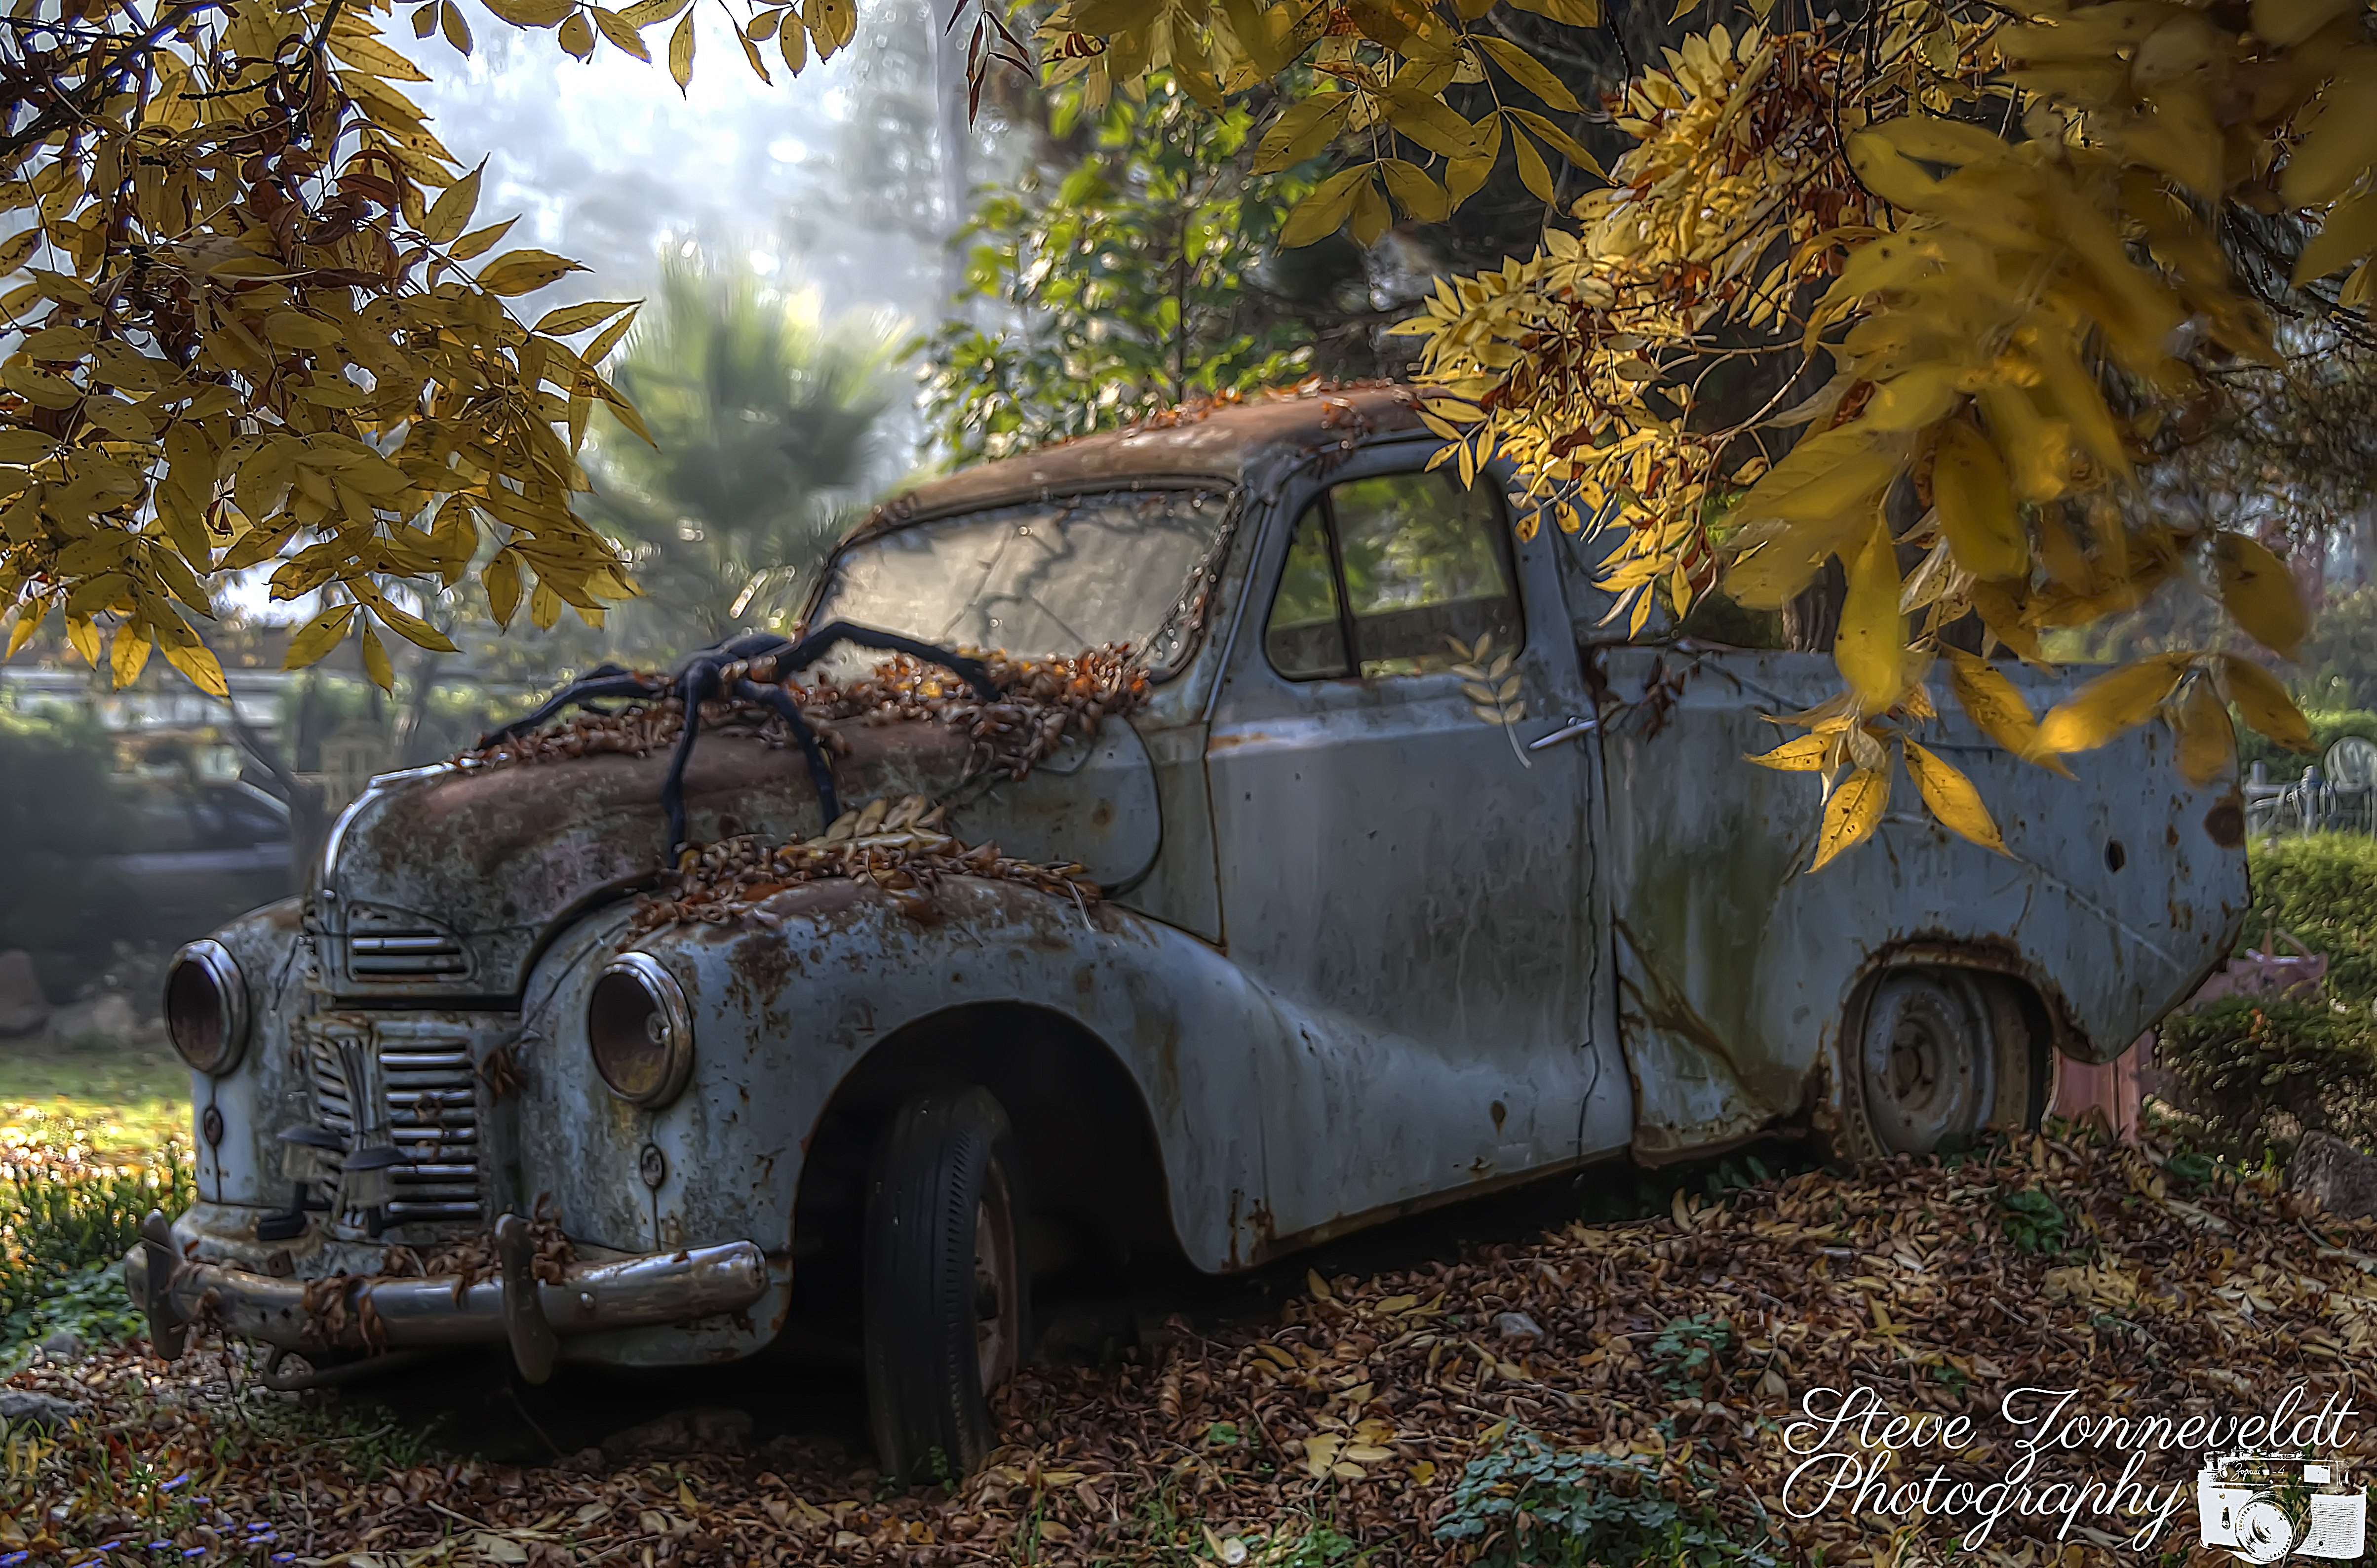 Old Rusty Car